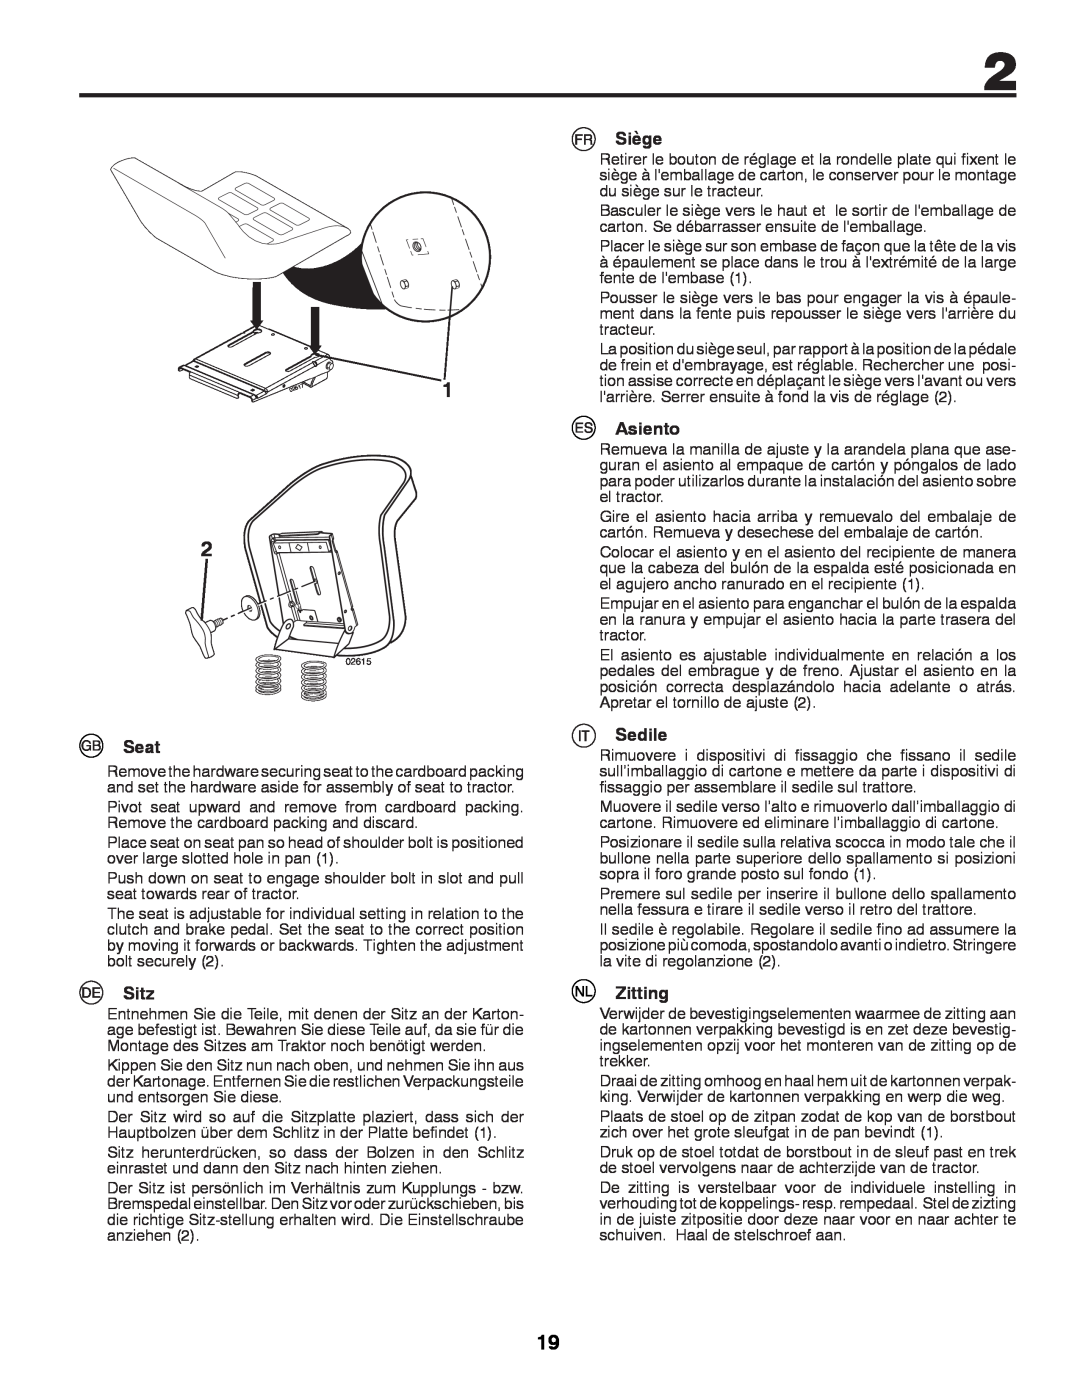 Partner Tech P11577 instruction manual Seat, Sitz, Siège, Asiento, Sedile, Zitting 